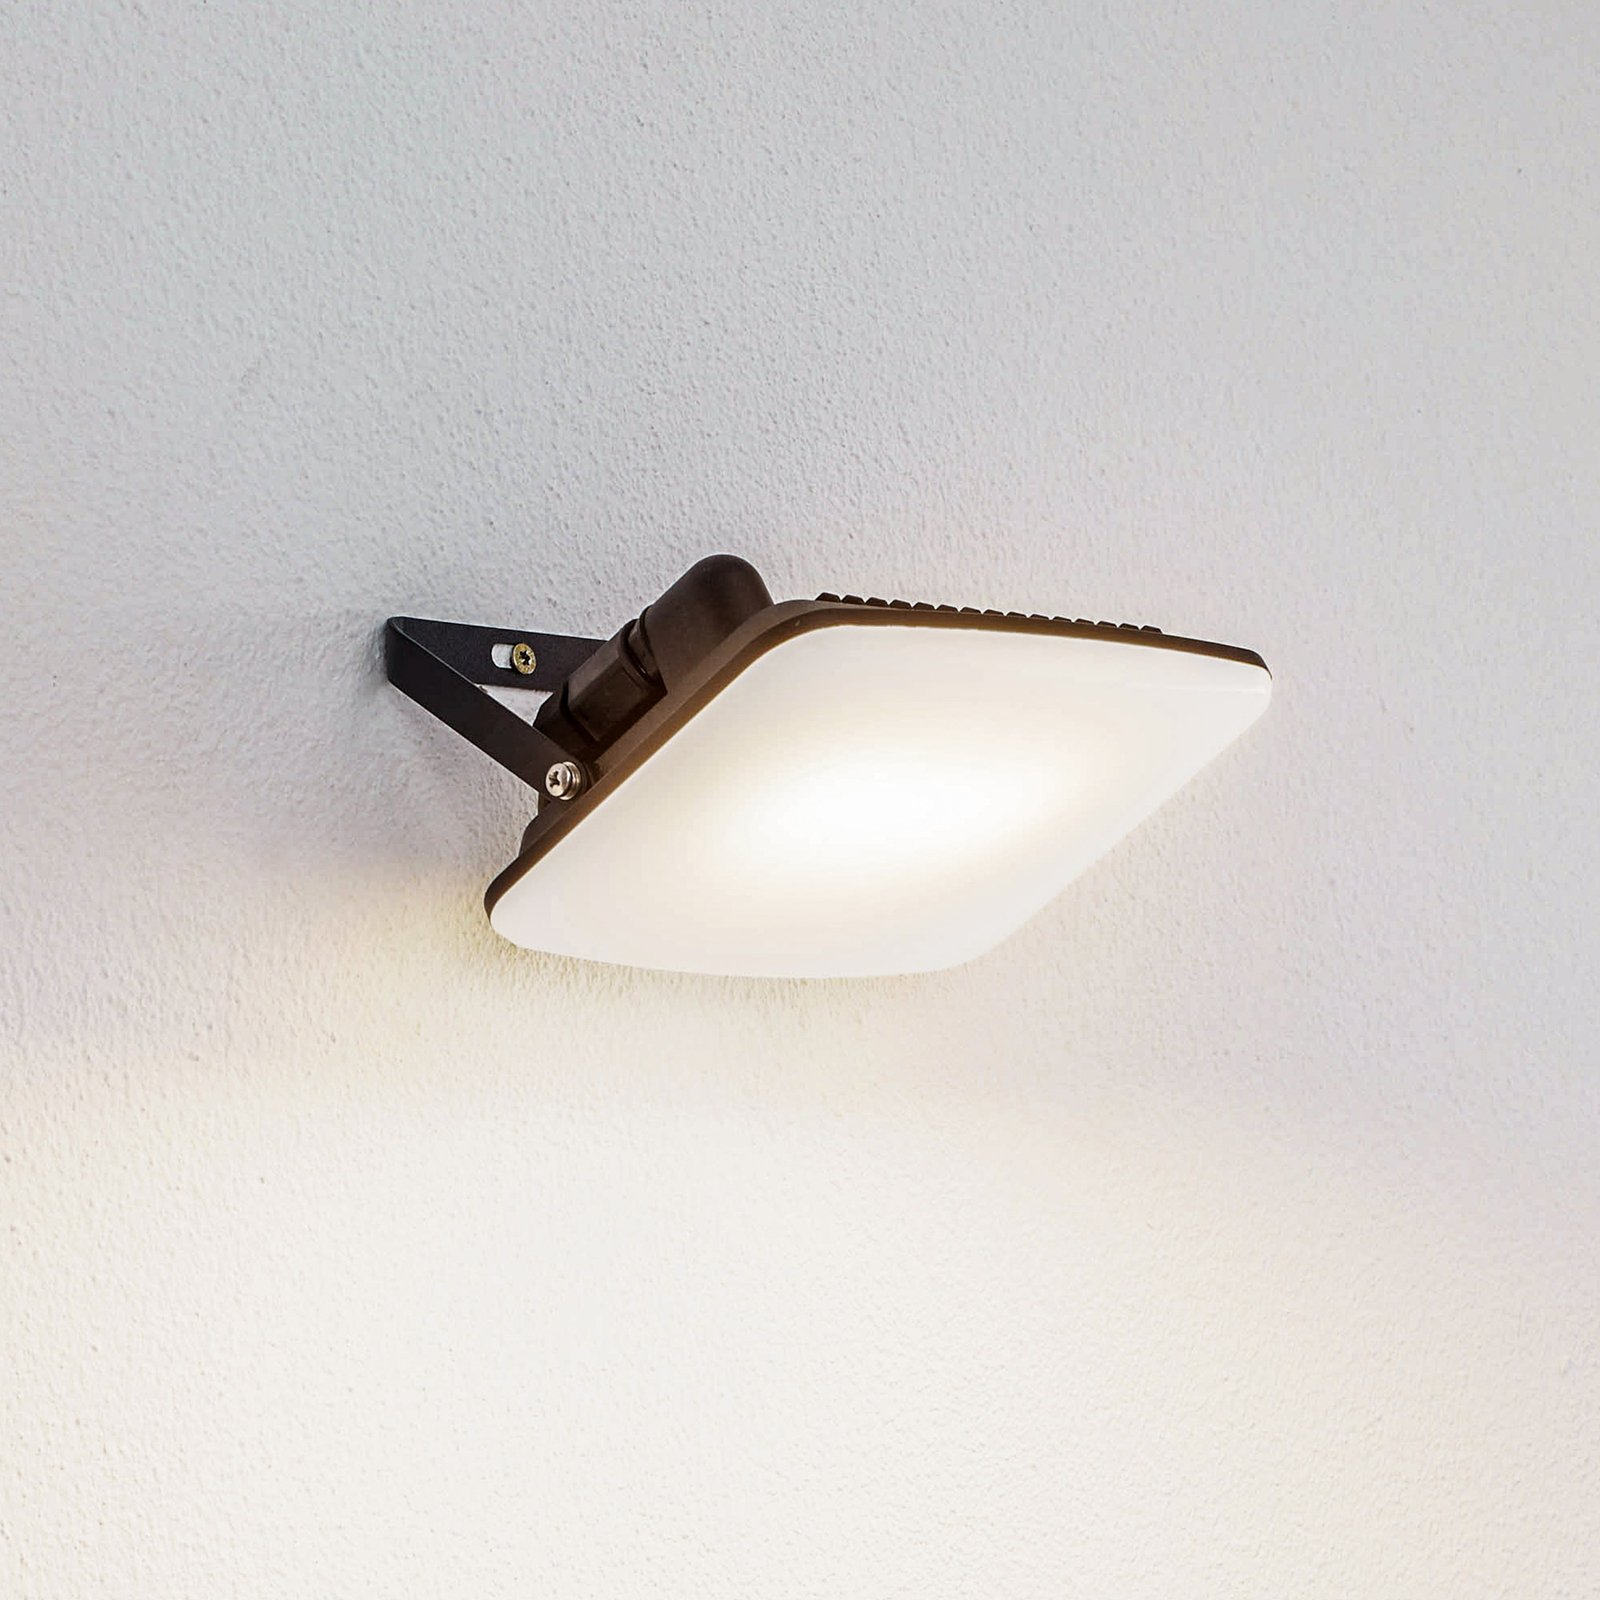 Prios Kaison aplique LED exterior, anchura 17,4 cm